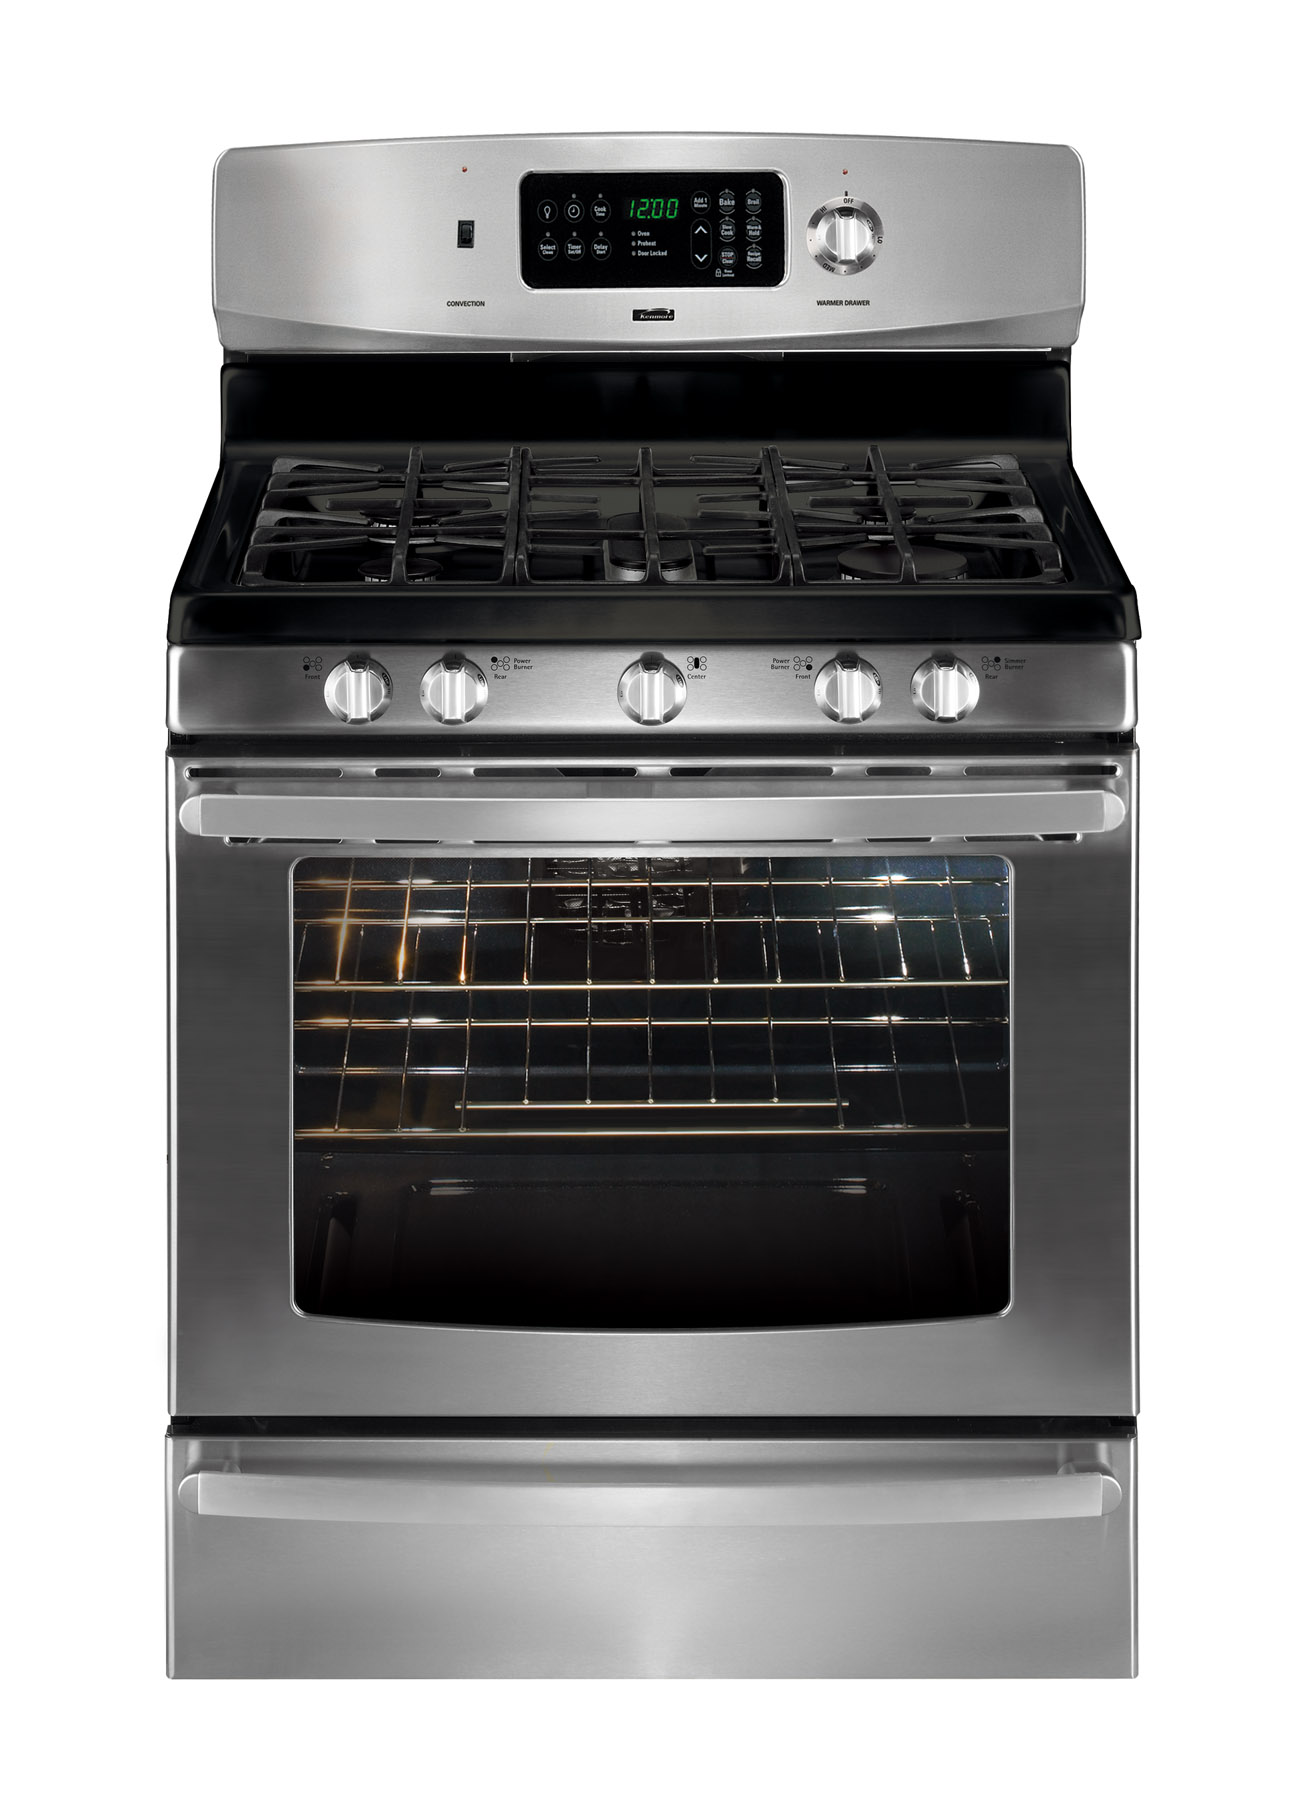 kenmore-range-stove-oven-model-790-77483806-parts-and-repair-help